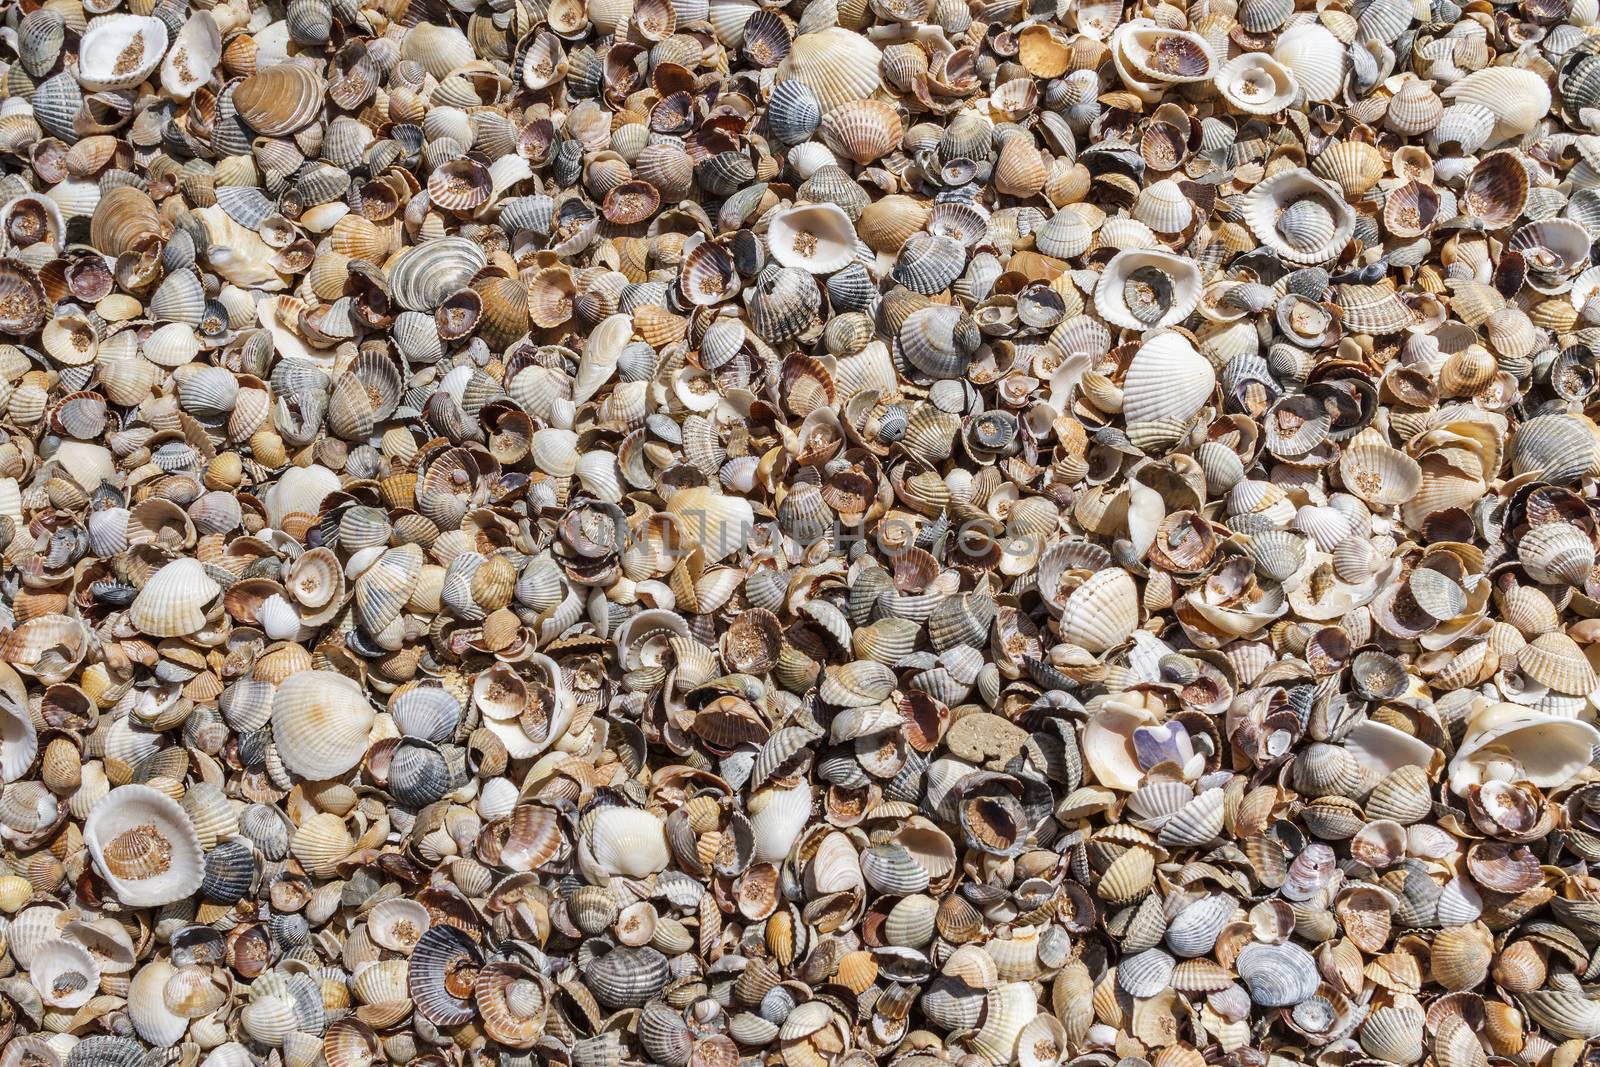  Many sea shells on a beach summer background. by fogen